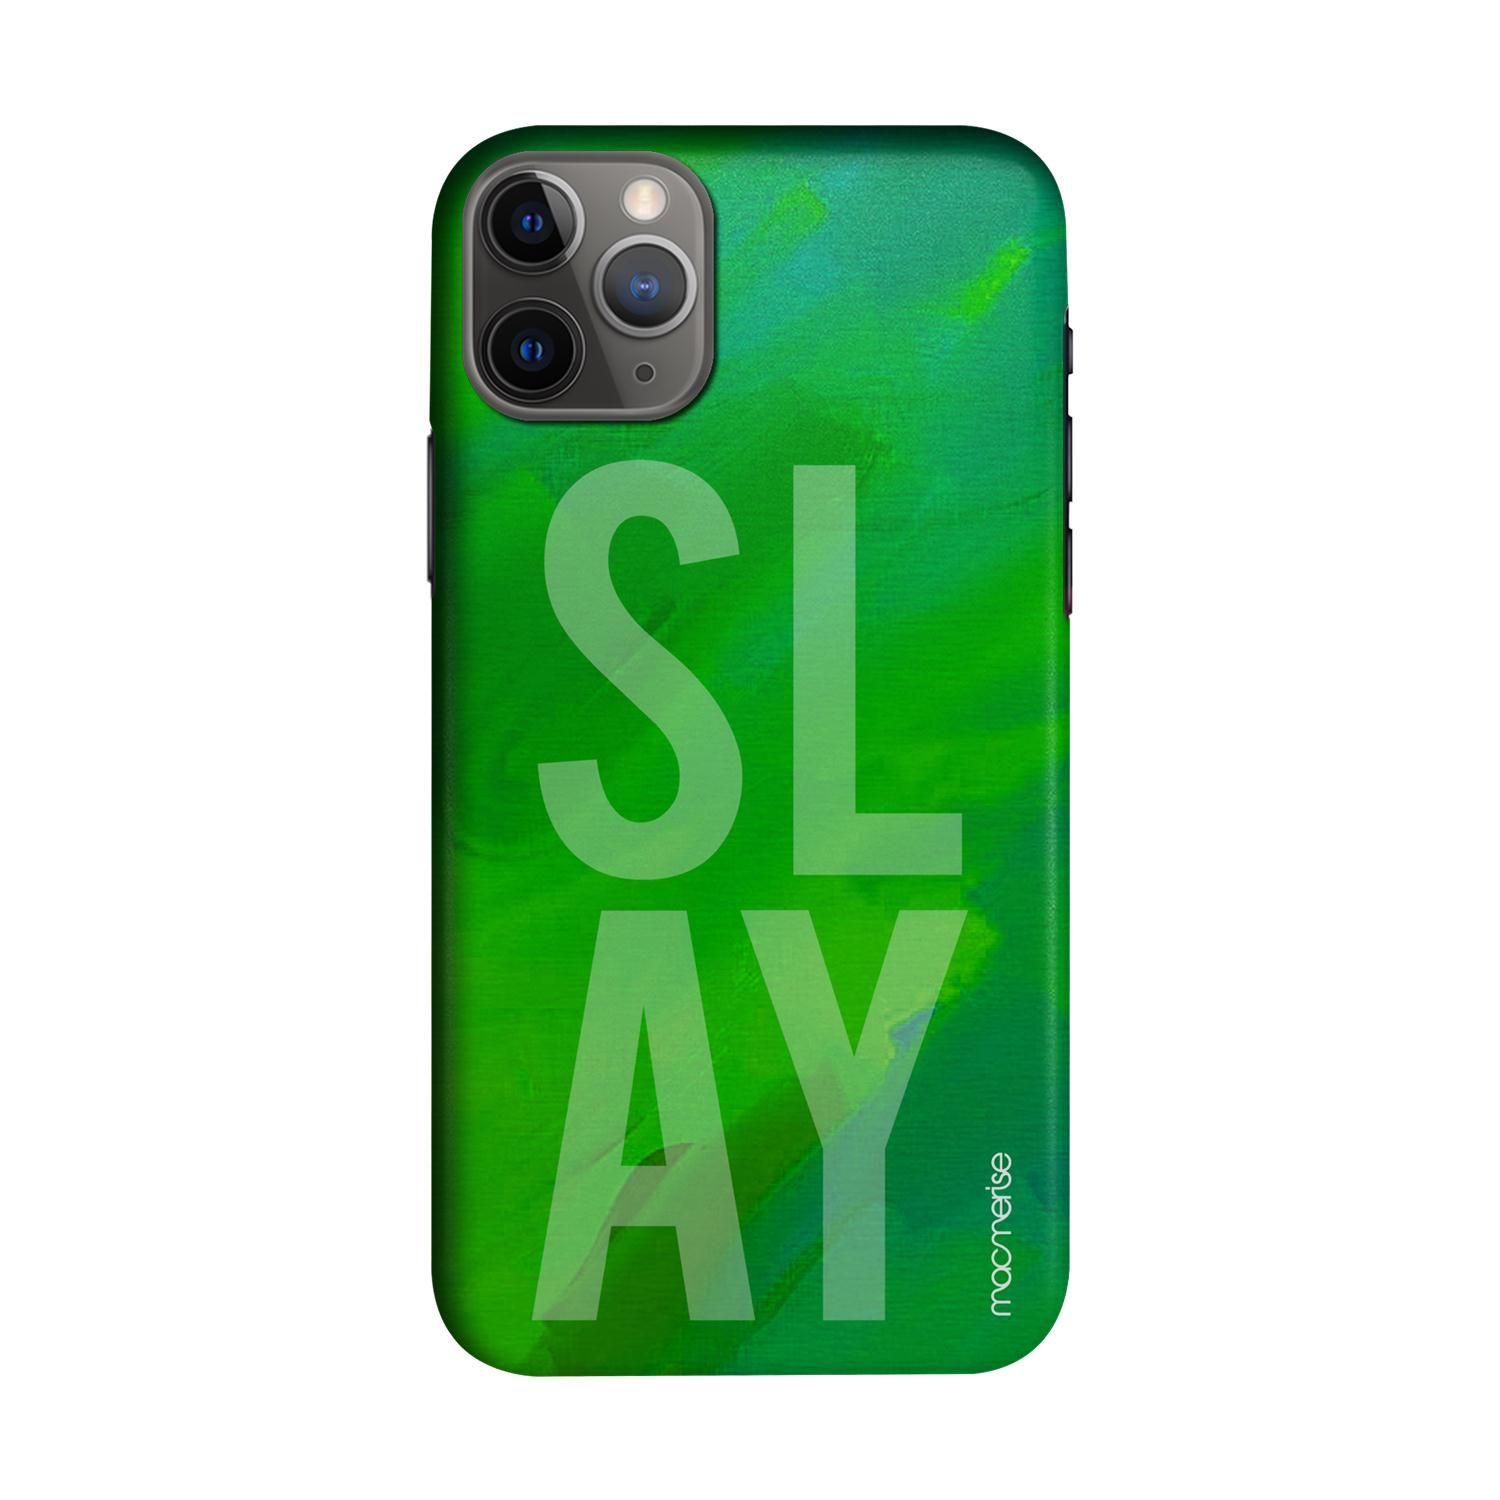 Buy Slay Green - Sleek Phone Case for iPhone 11 Pro Online